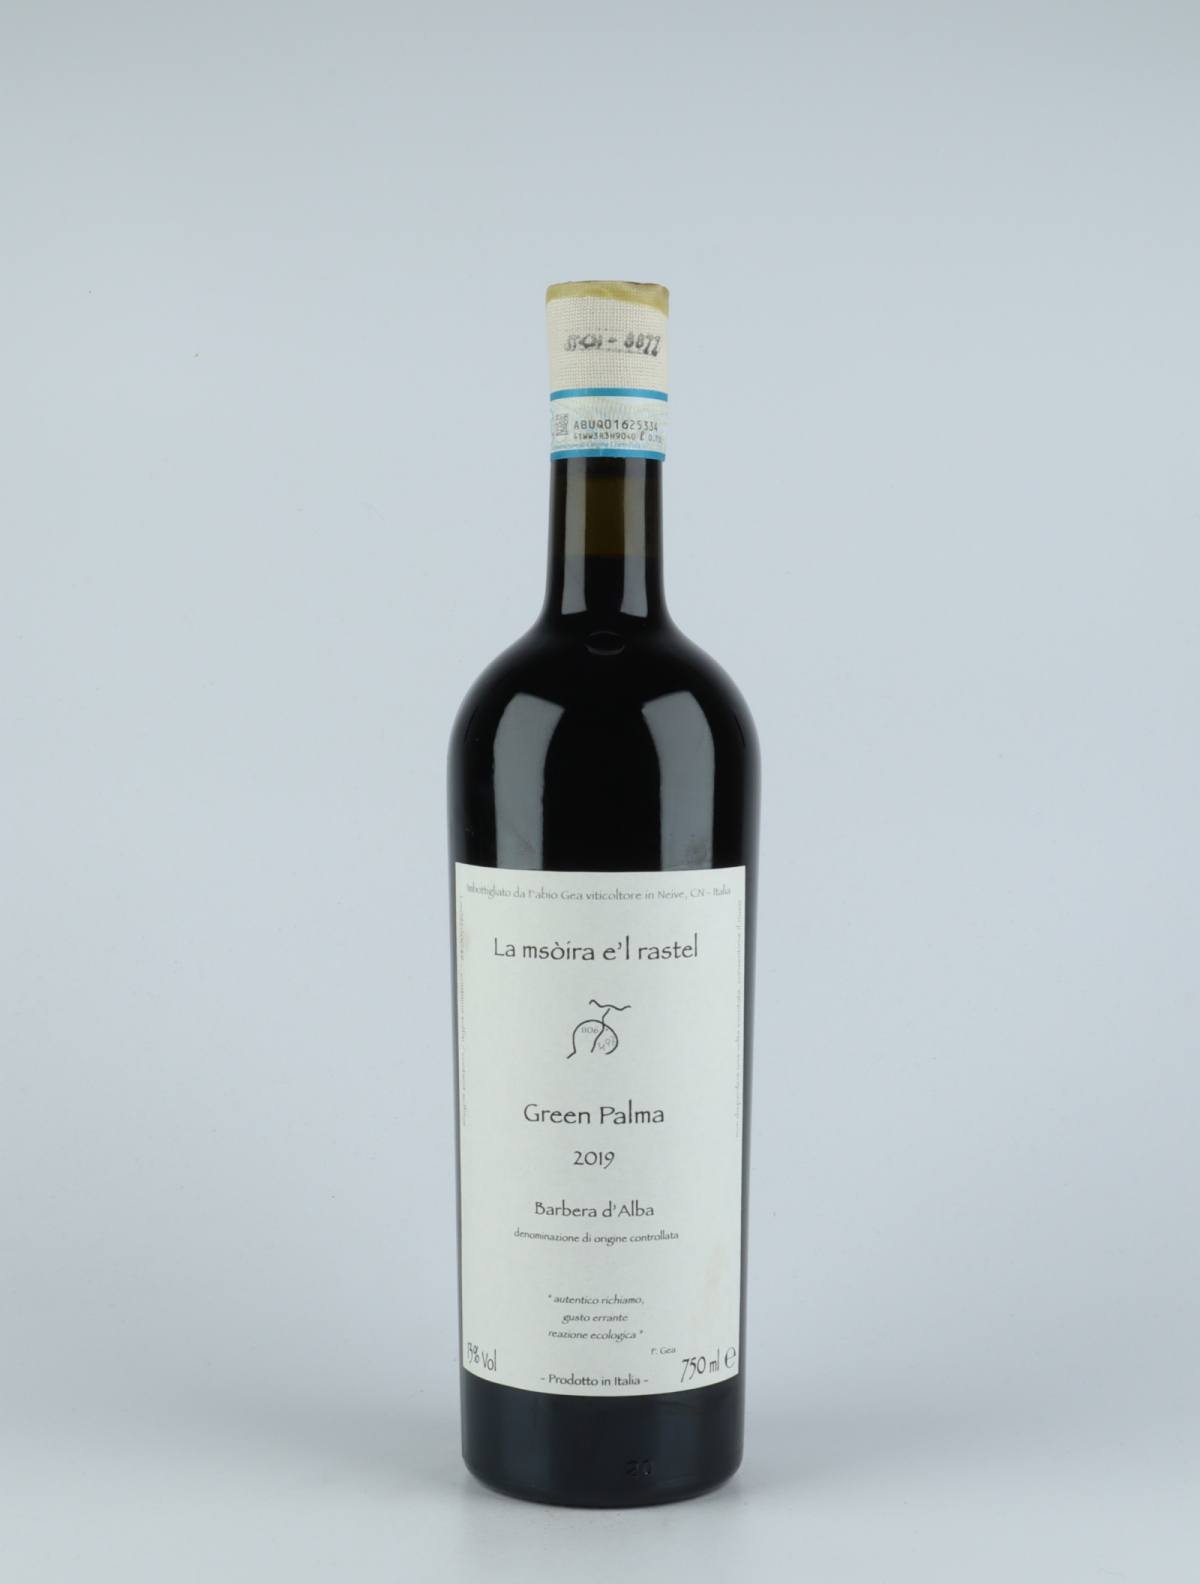 A bottle 2019 Green Palma - Barbera d'Alba Red wine from Fabio Gea, Piedmont in Italy